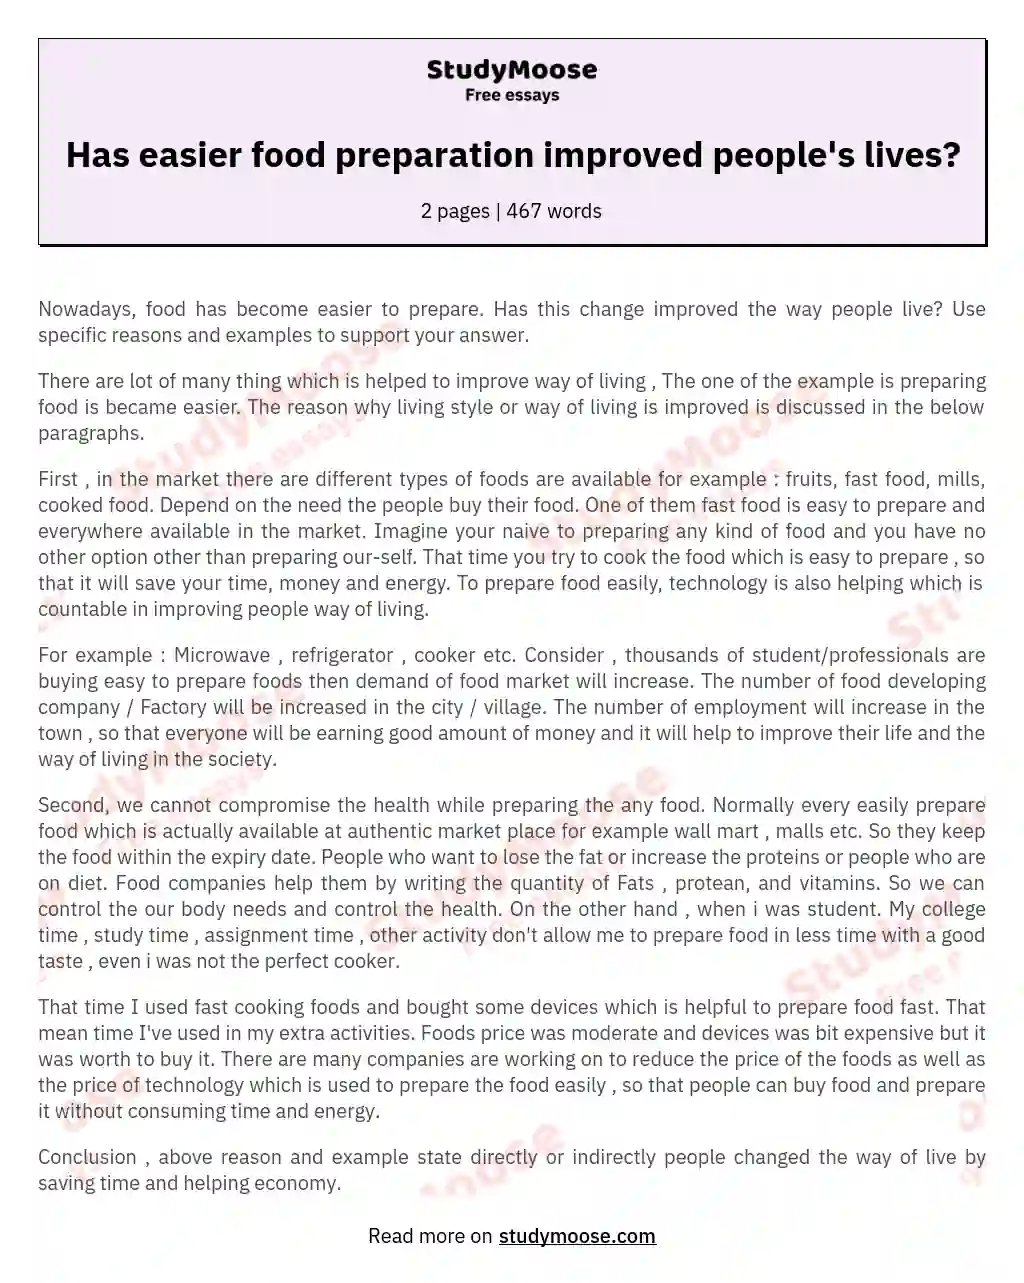 Has easier food preparation improved people's lives? essay